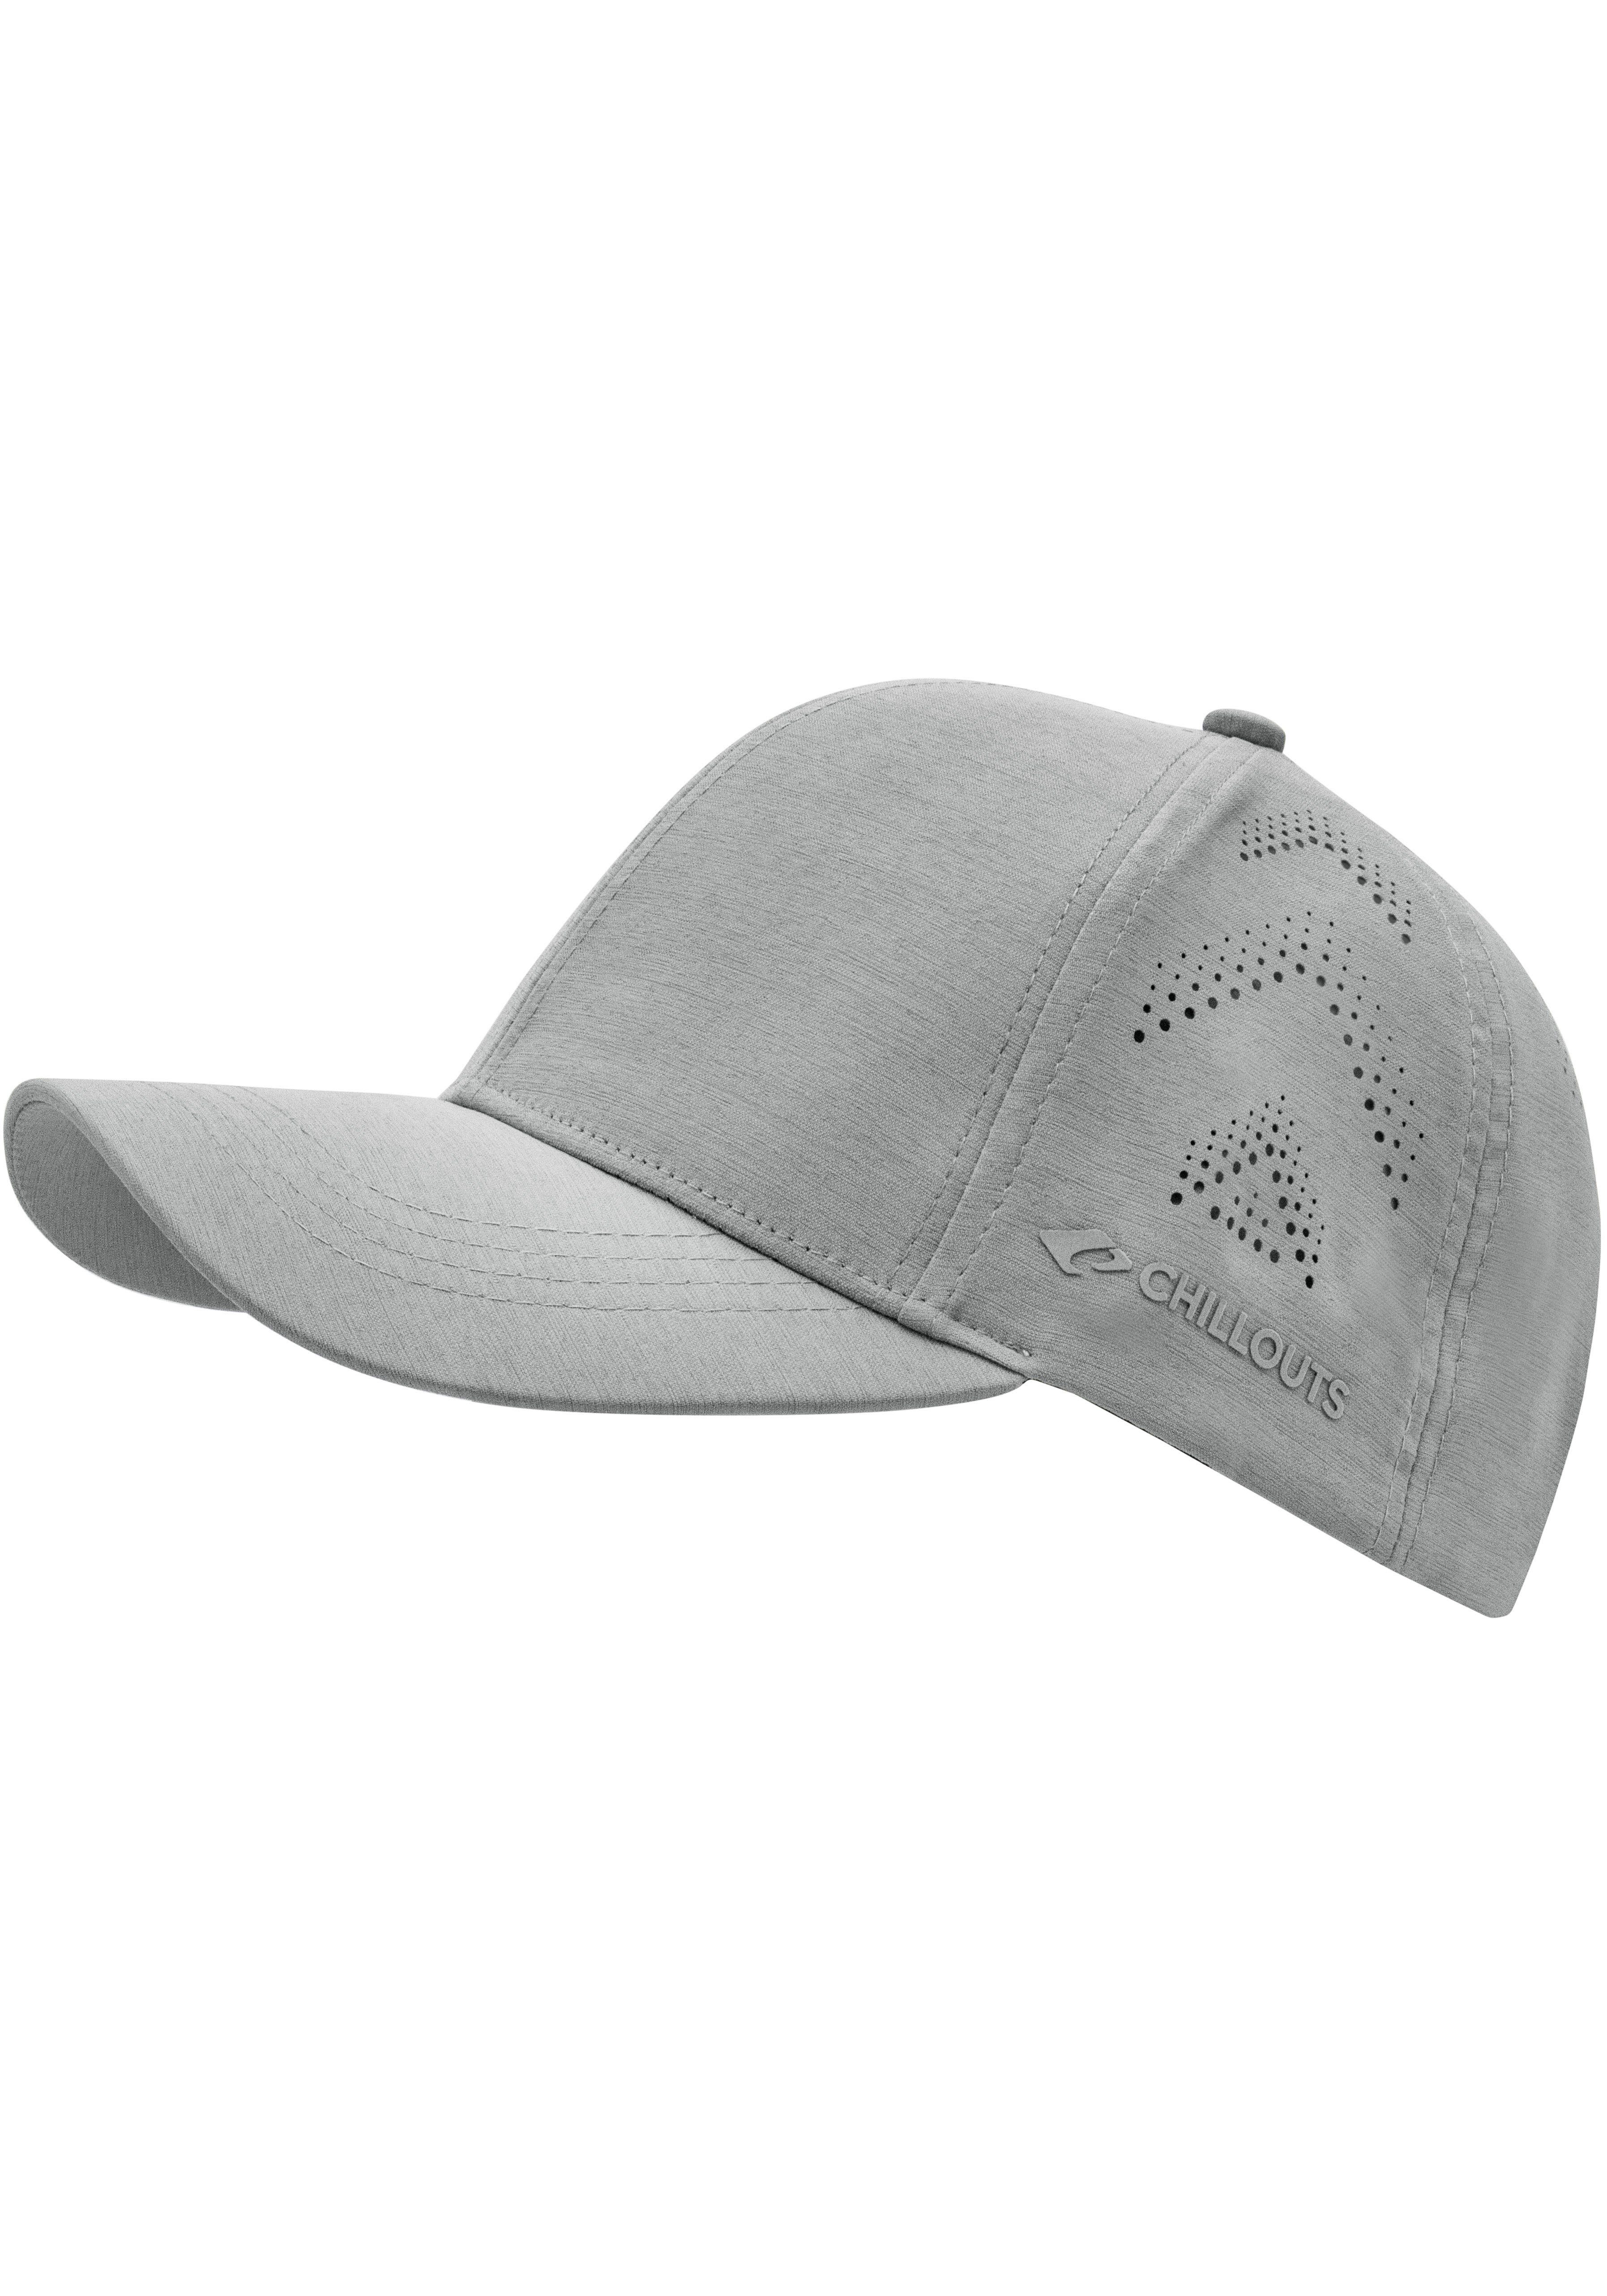 hellgrau Philadelphia mit Hat, Klettverschluß, UPF50+ Cap chillouts Baseball Cap